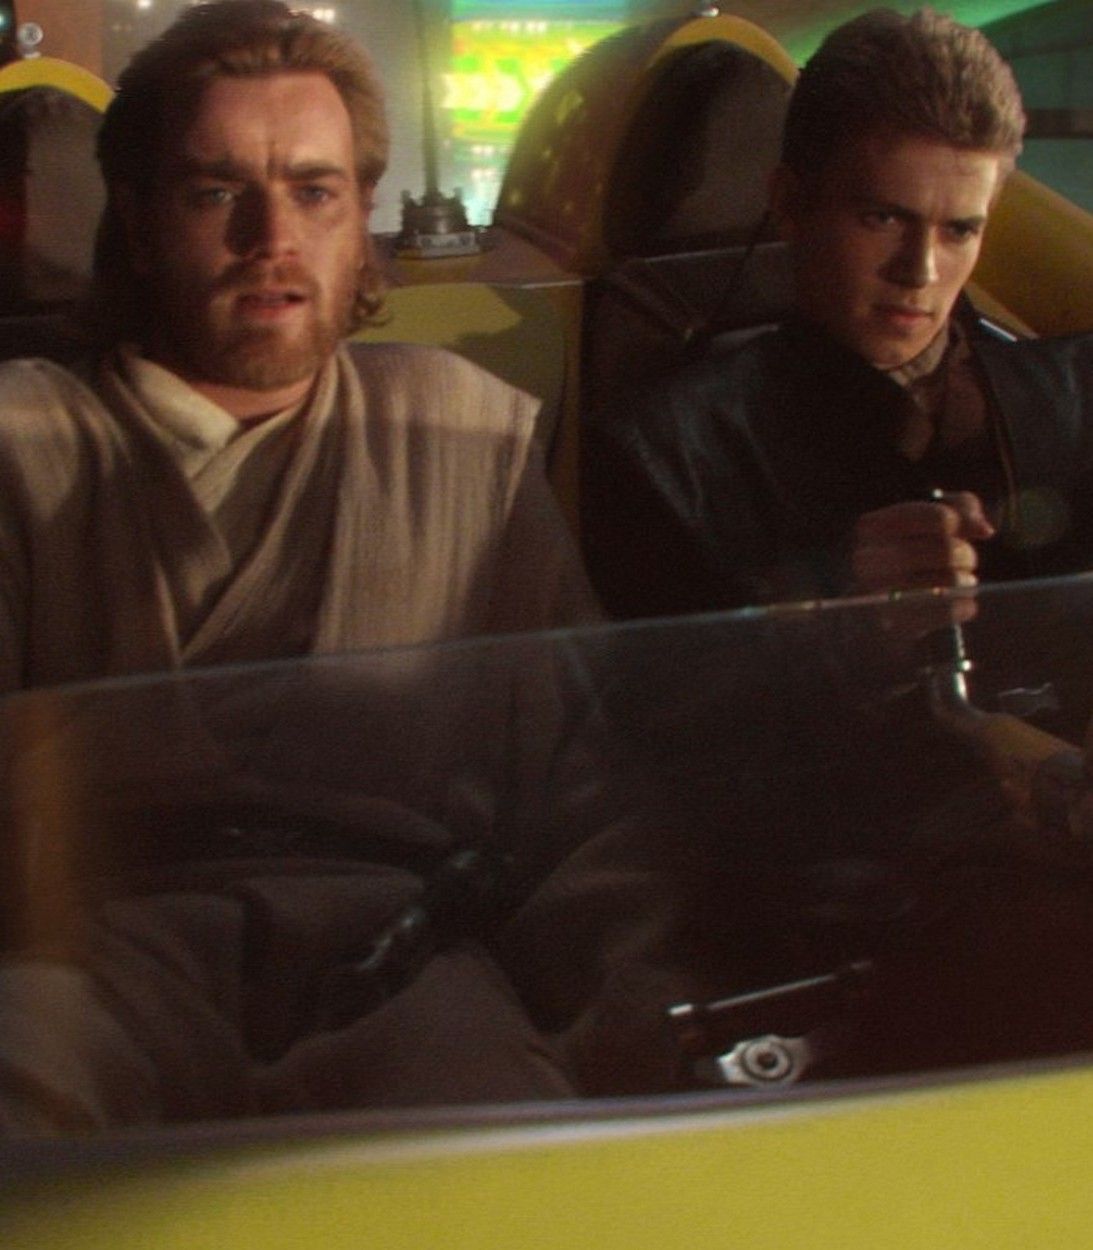 Ewan McGregor as Obi-Wan Kenobi and Hayden Christensen as Anakin Skywalker in Star Wars Attack of the Clones vertical